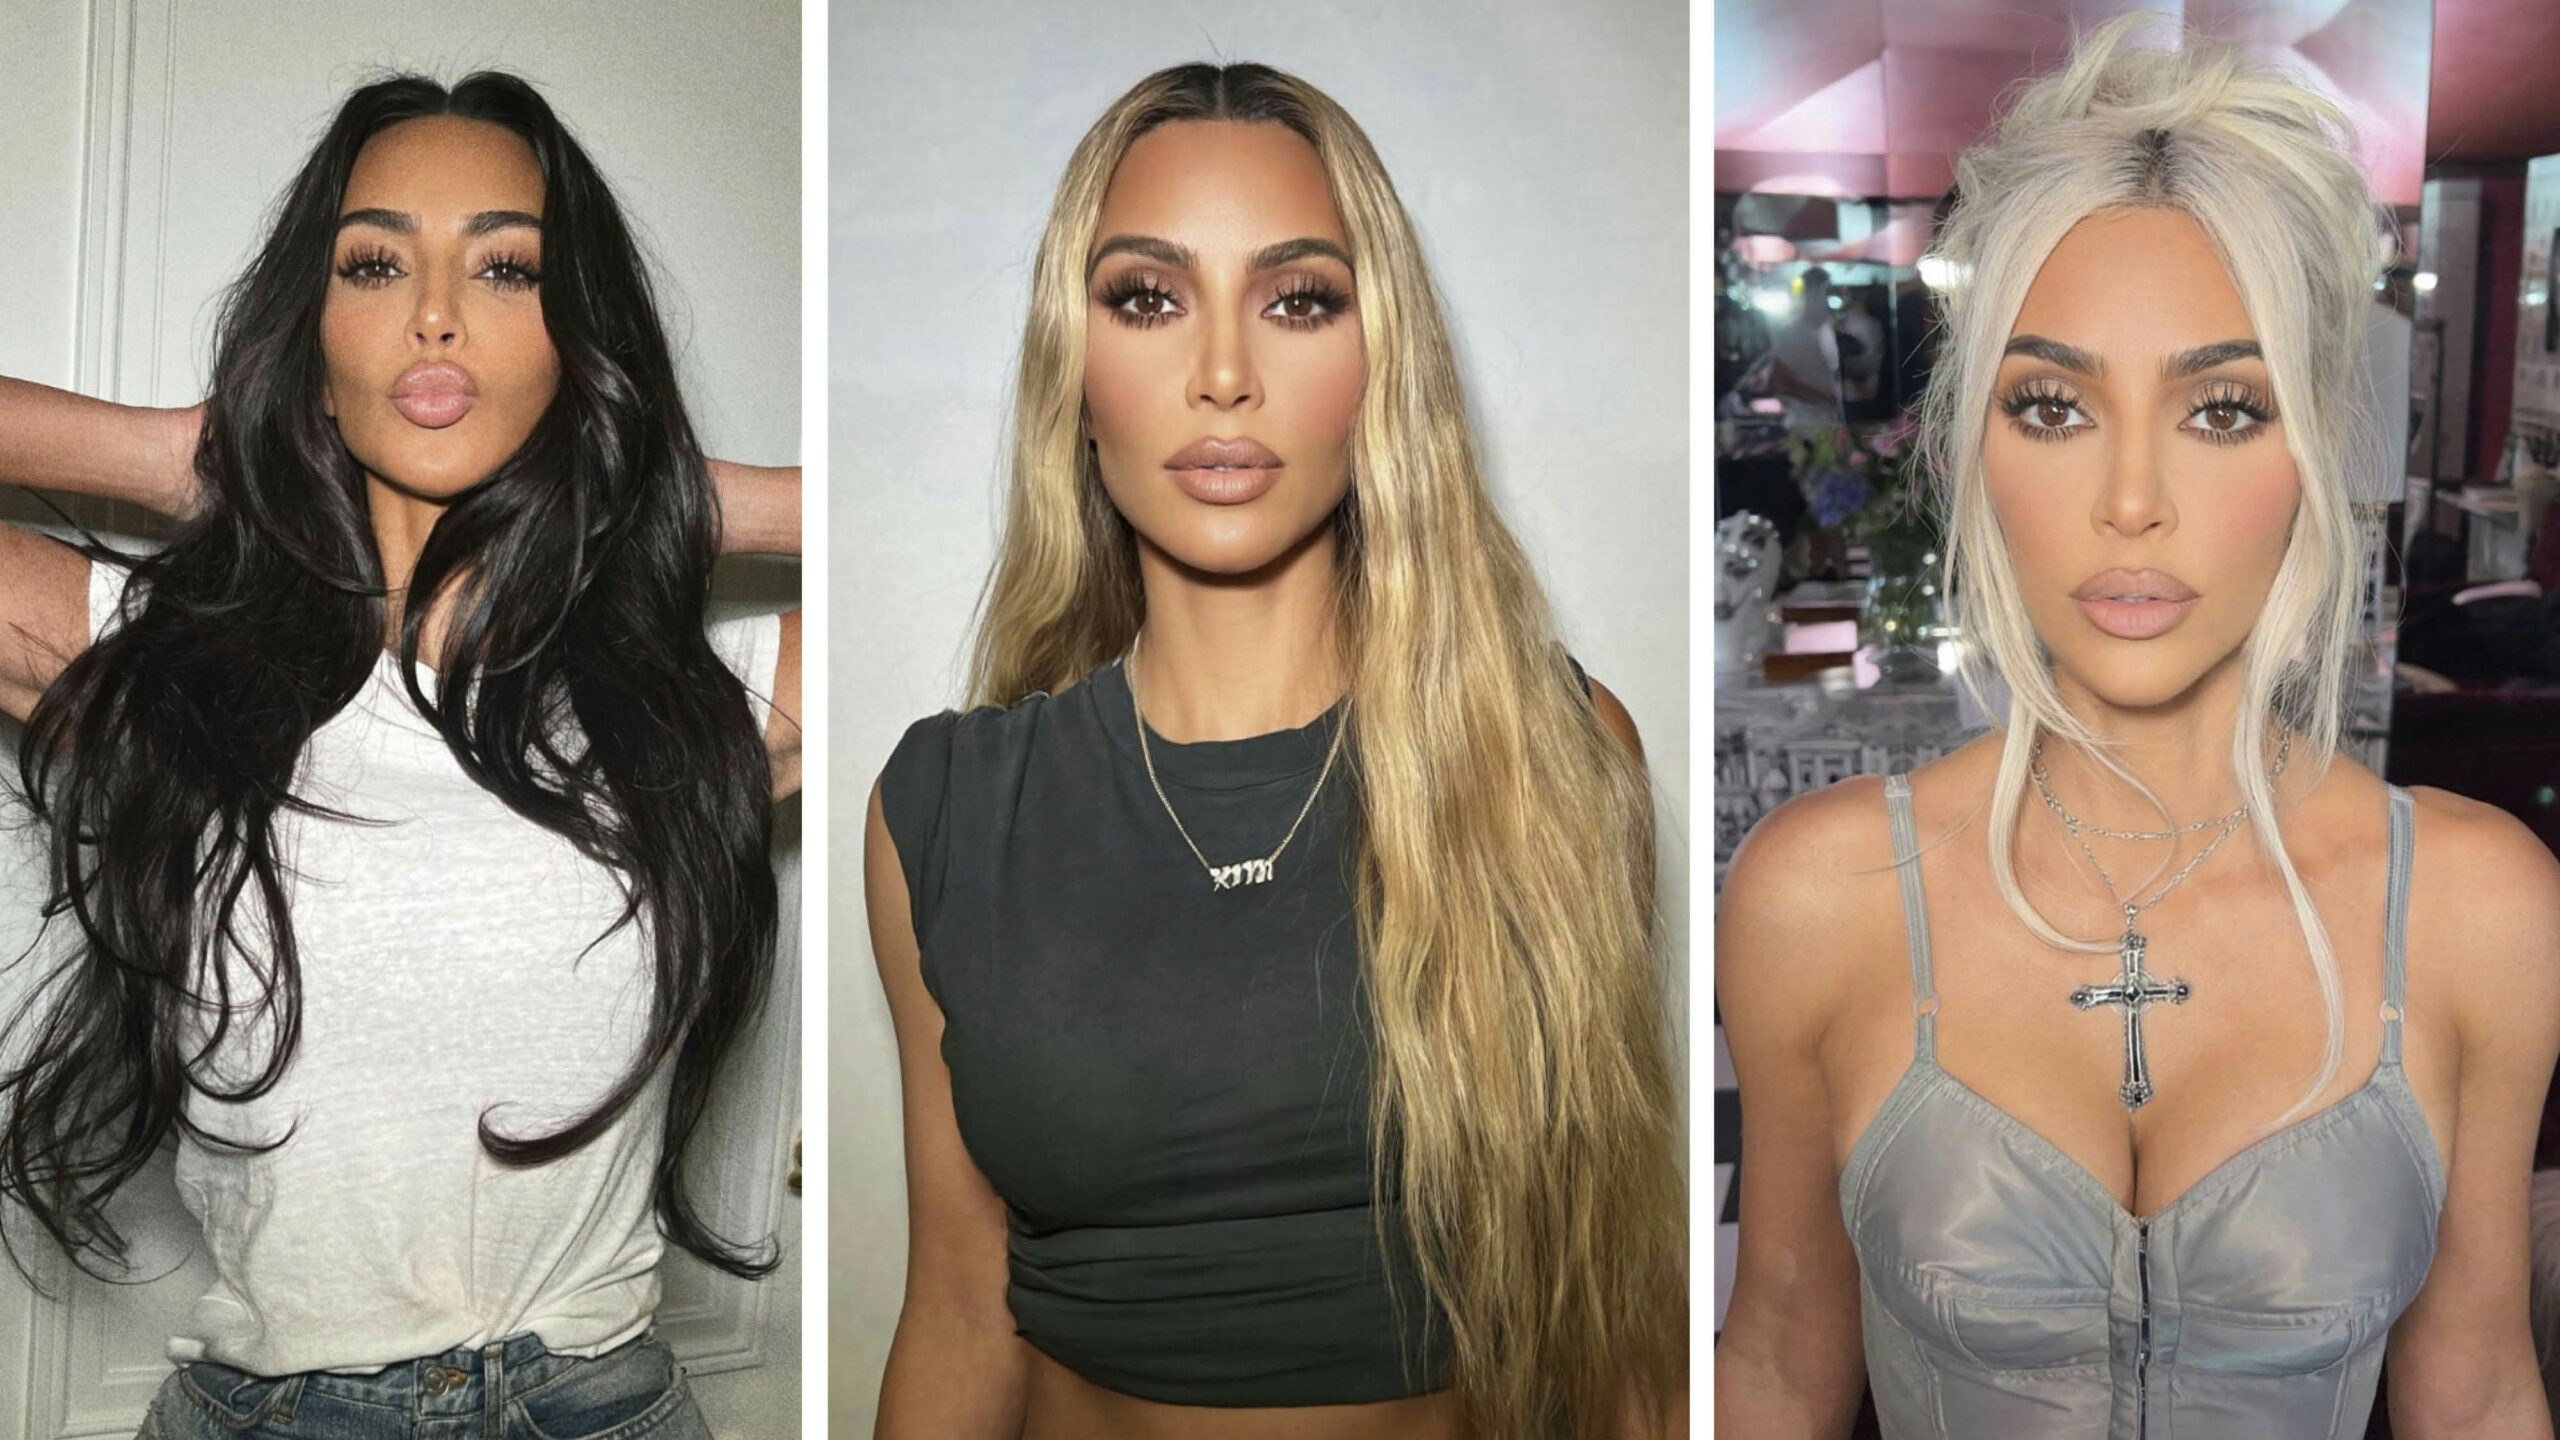 The Evolution Of Kim Kardashian: A 10 Year Transformation